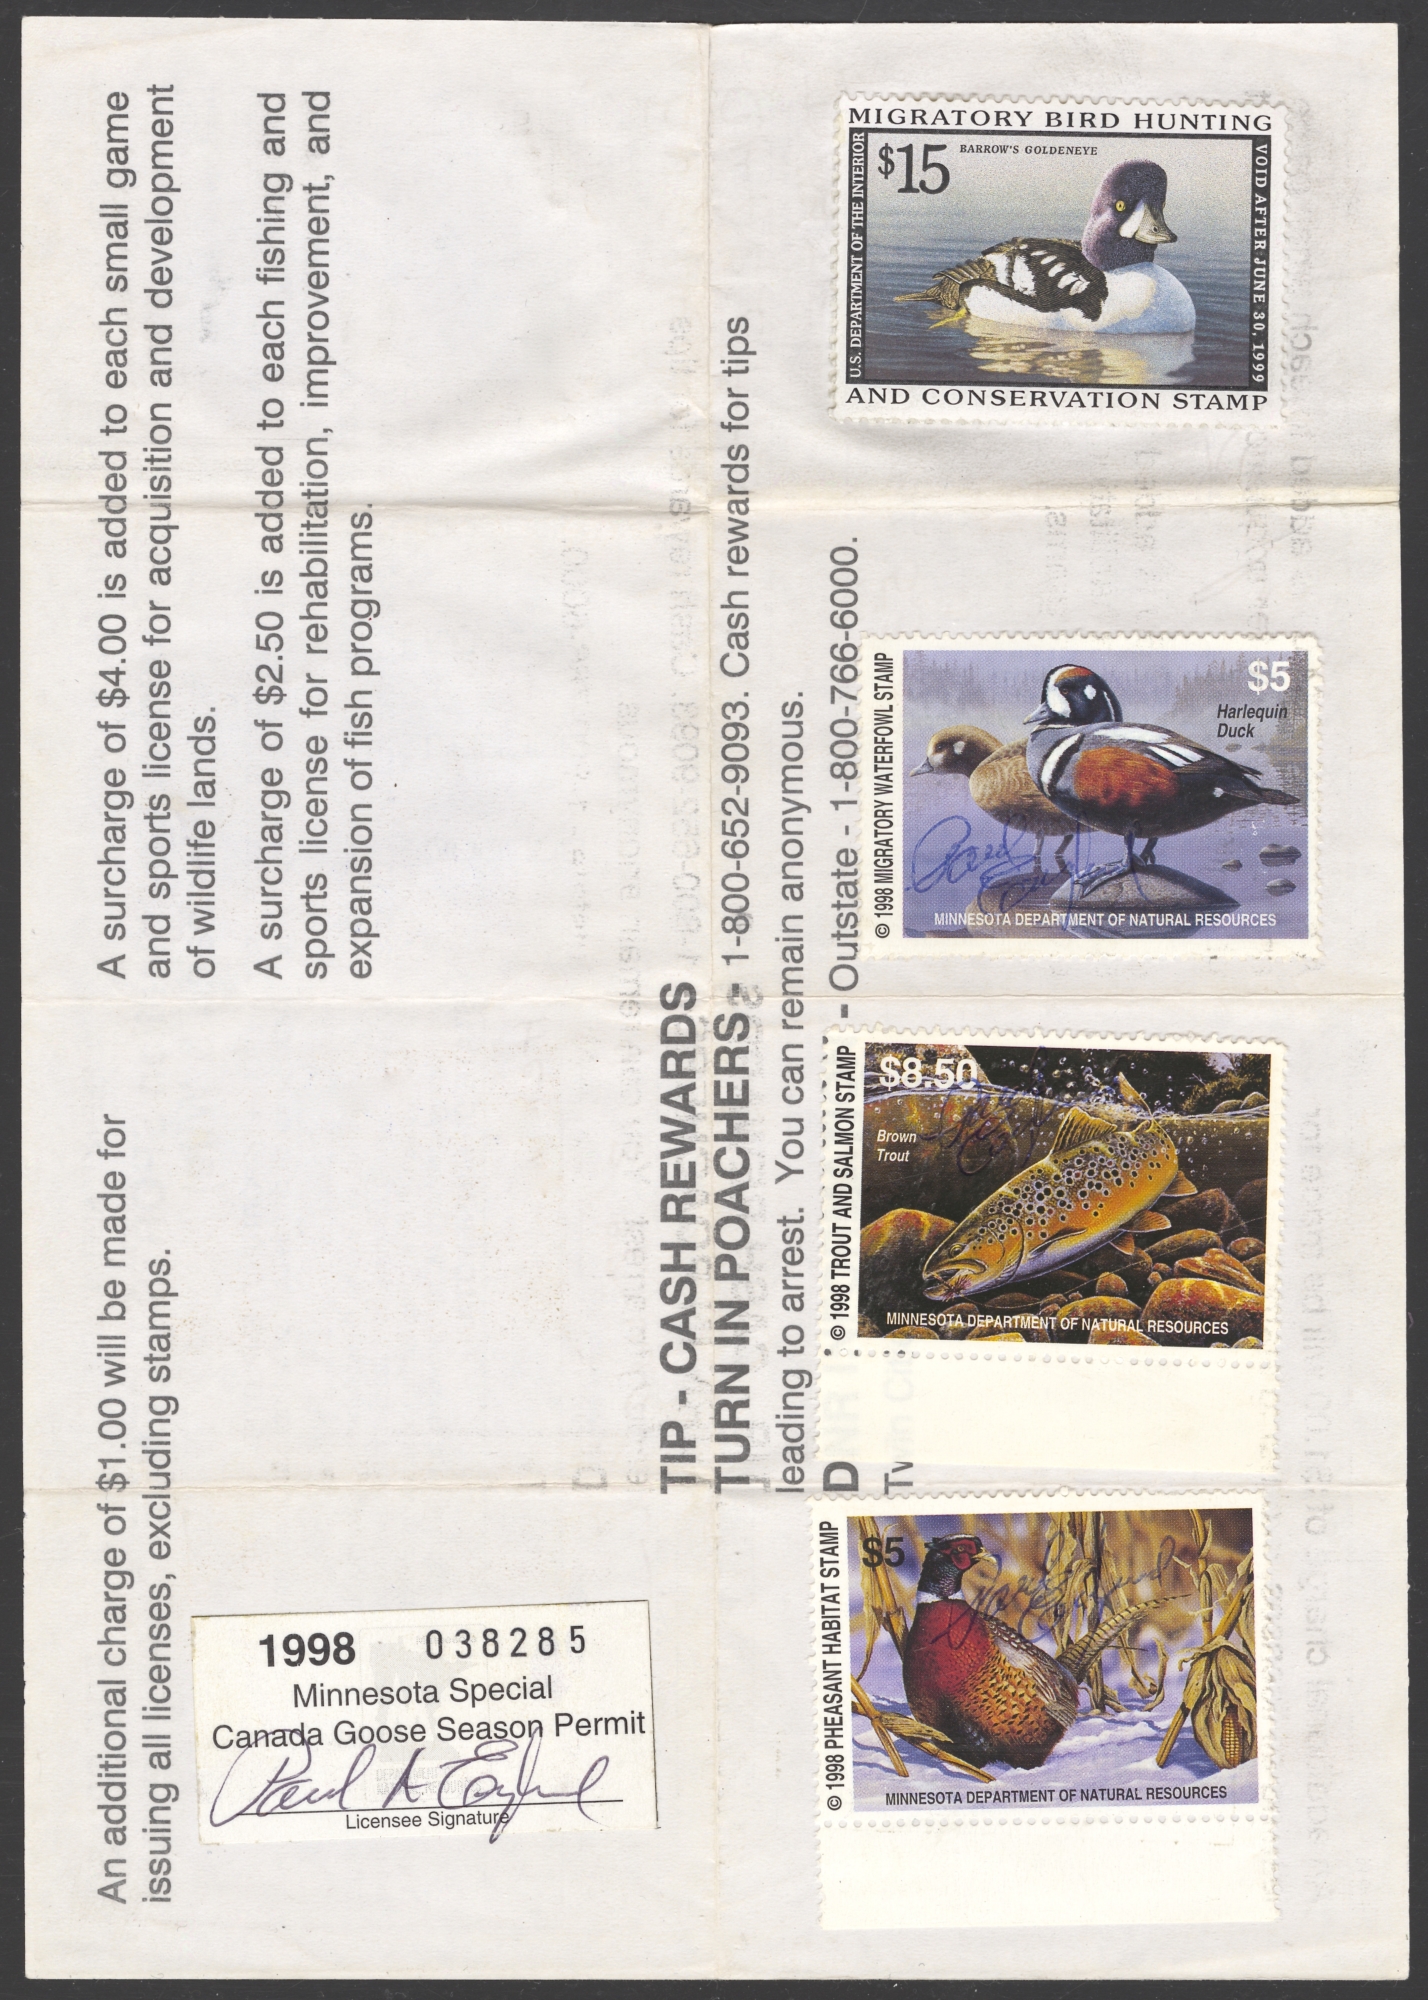 1998 Minnesota Special Canada Goose Season on license